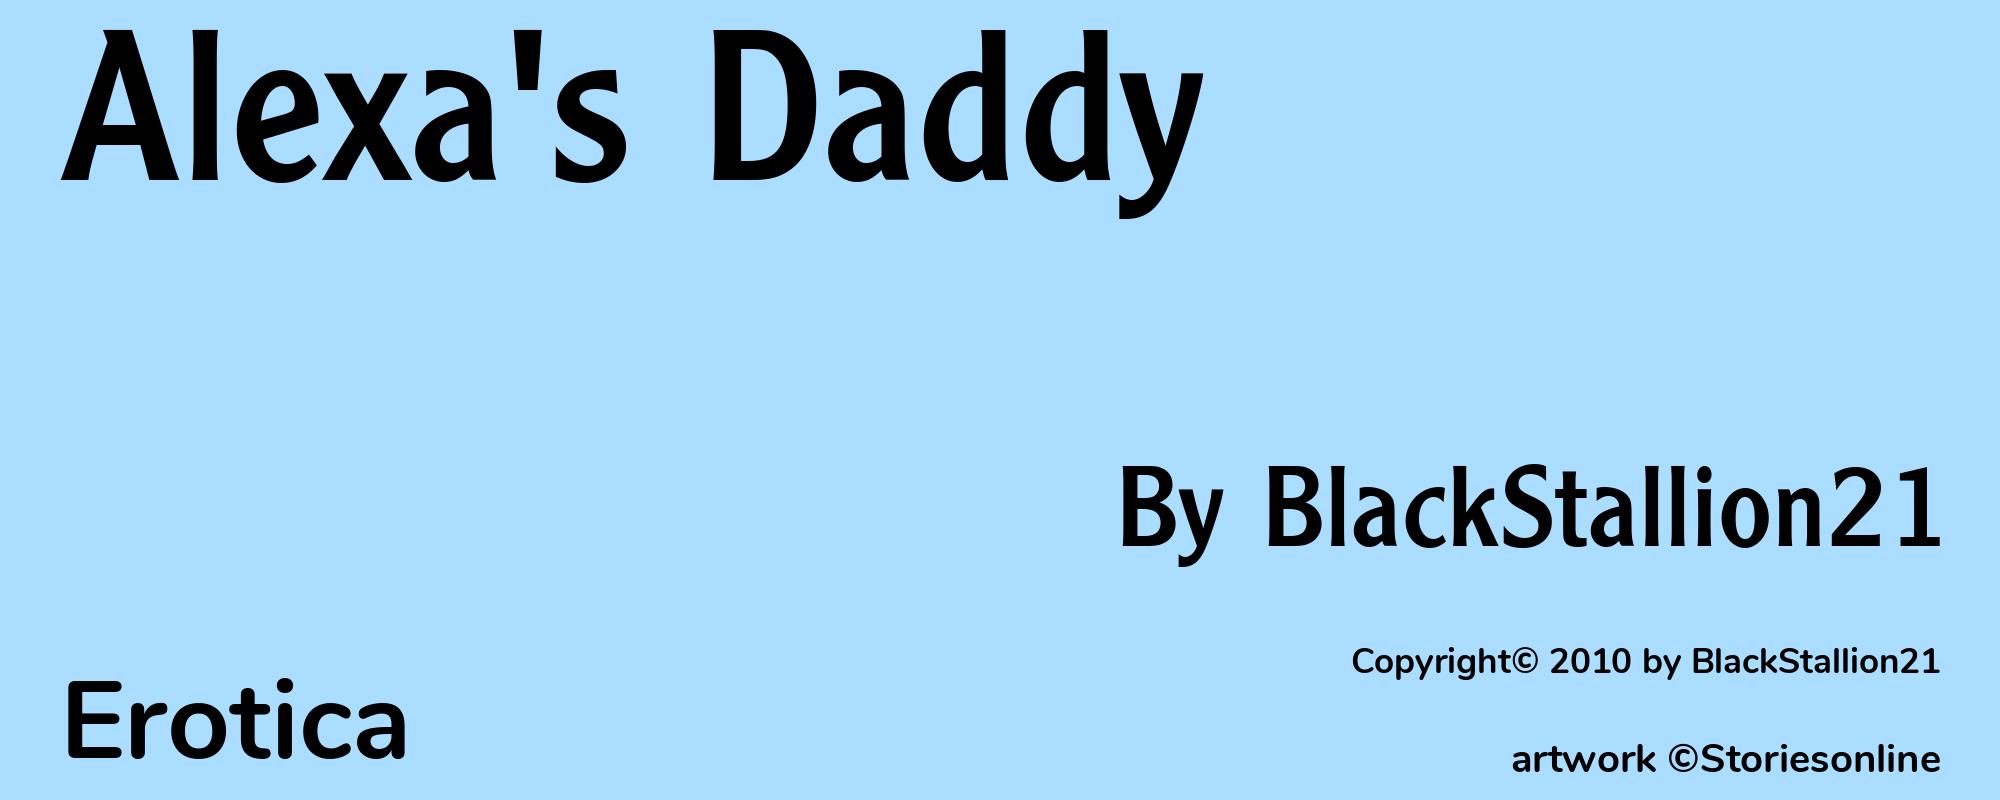 Alexa's Daddy - Cover